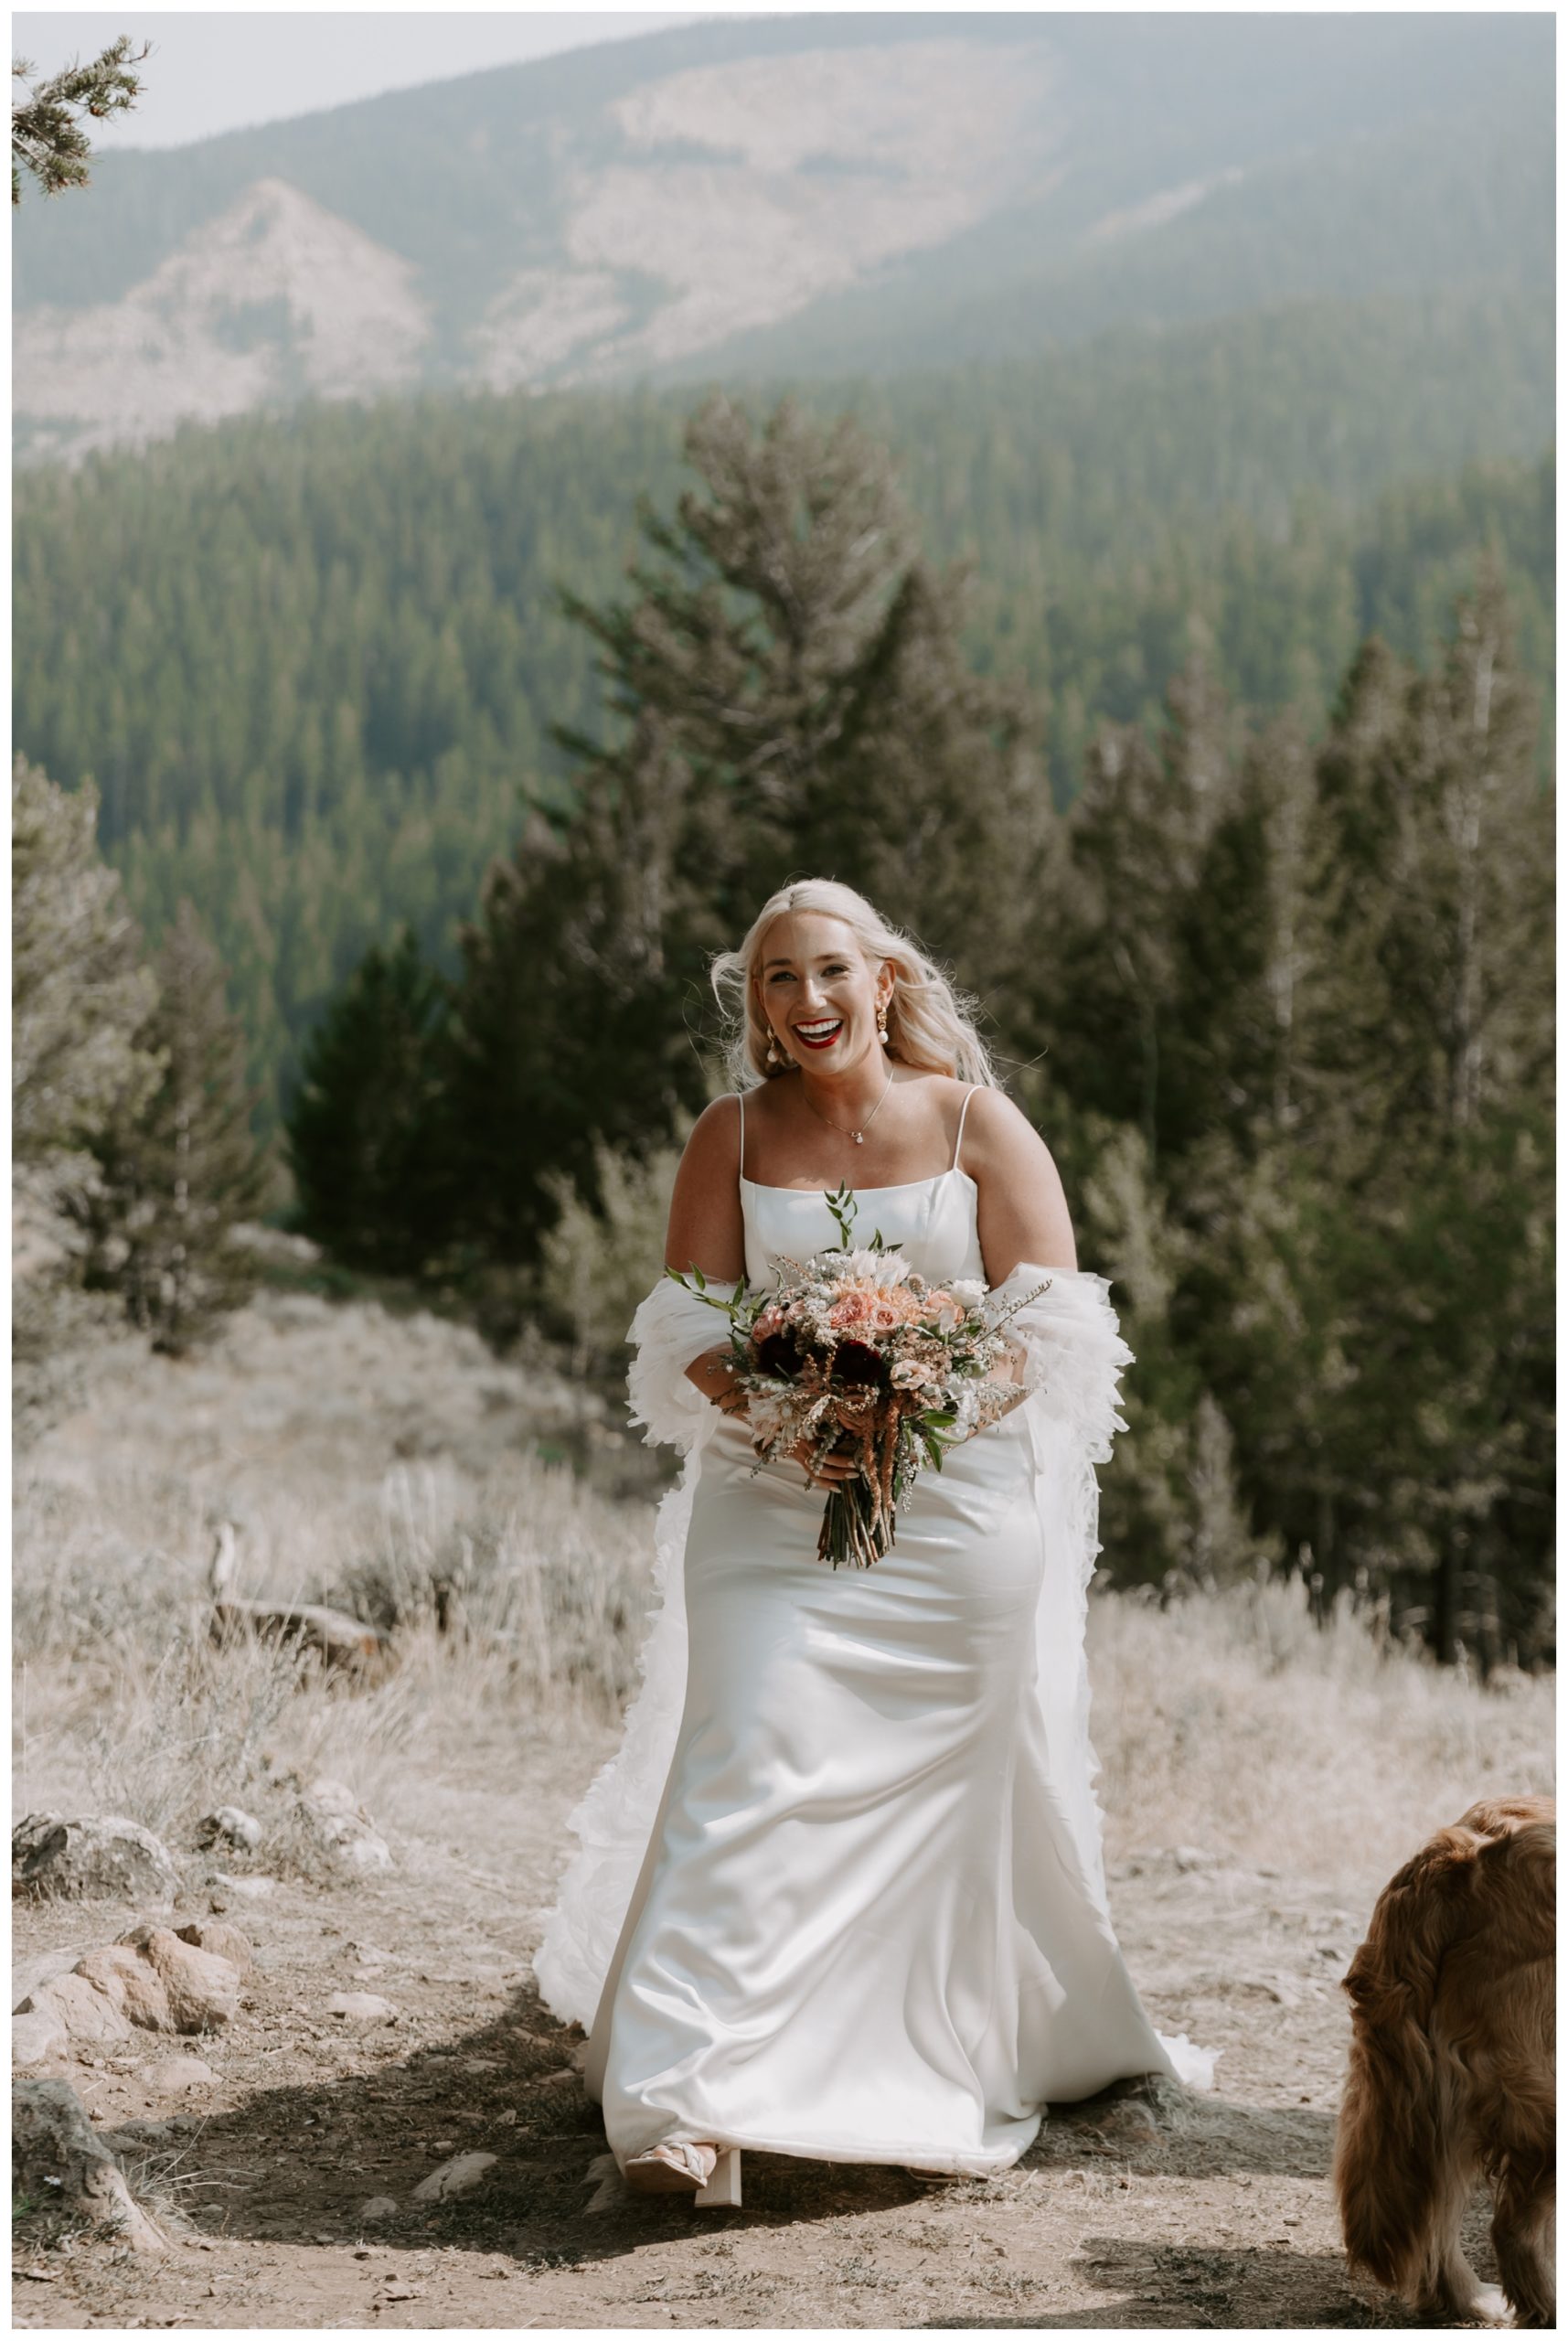 The Wedding Tree; Bridger-Teton National Forest; Grand Teton elopement locations